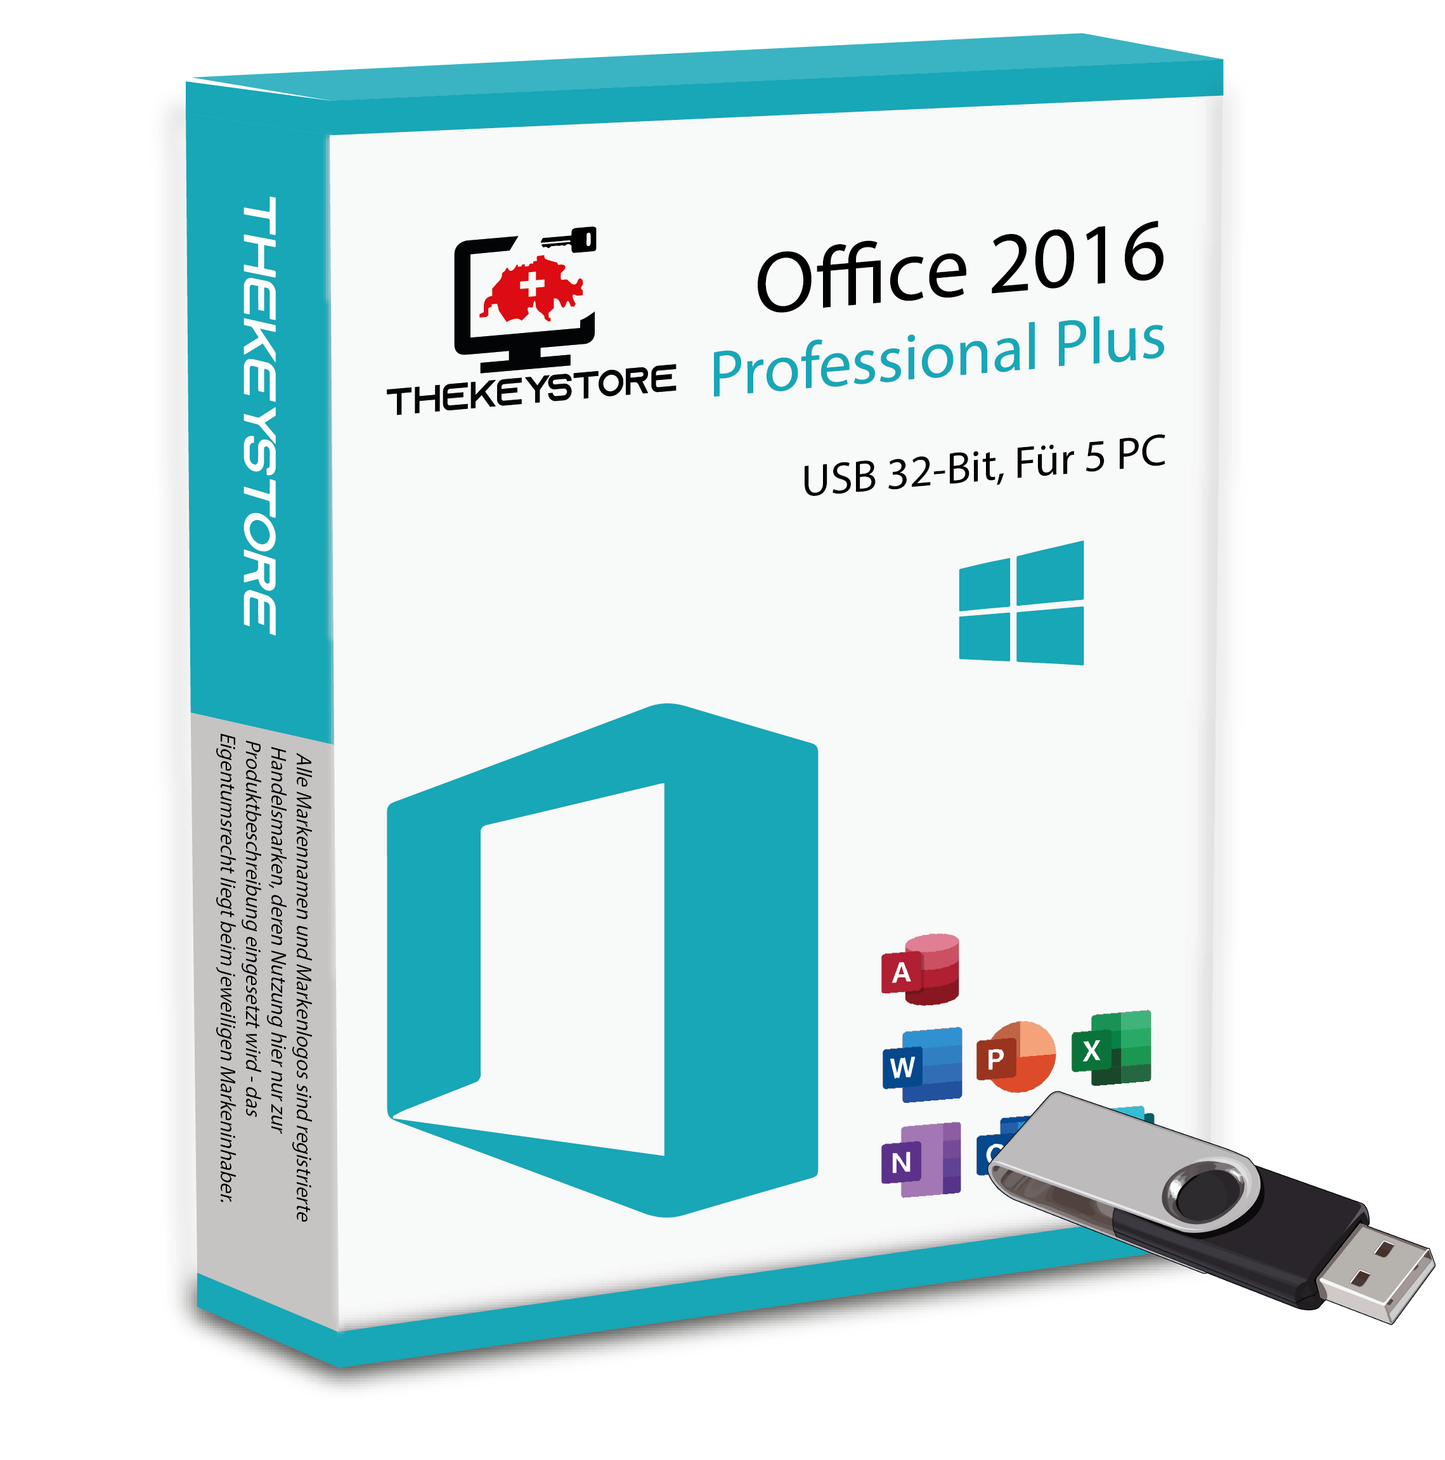 Microsoft Office 2016 Professional Plus - Für 5 PC - TheKeyStore Schweiz